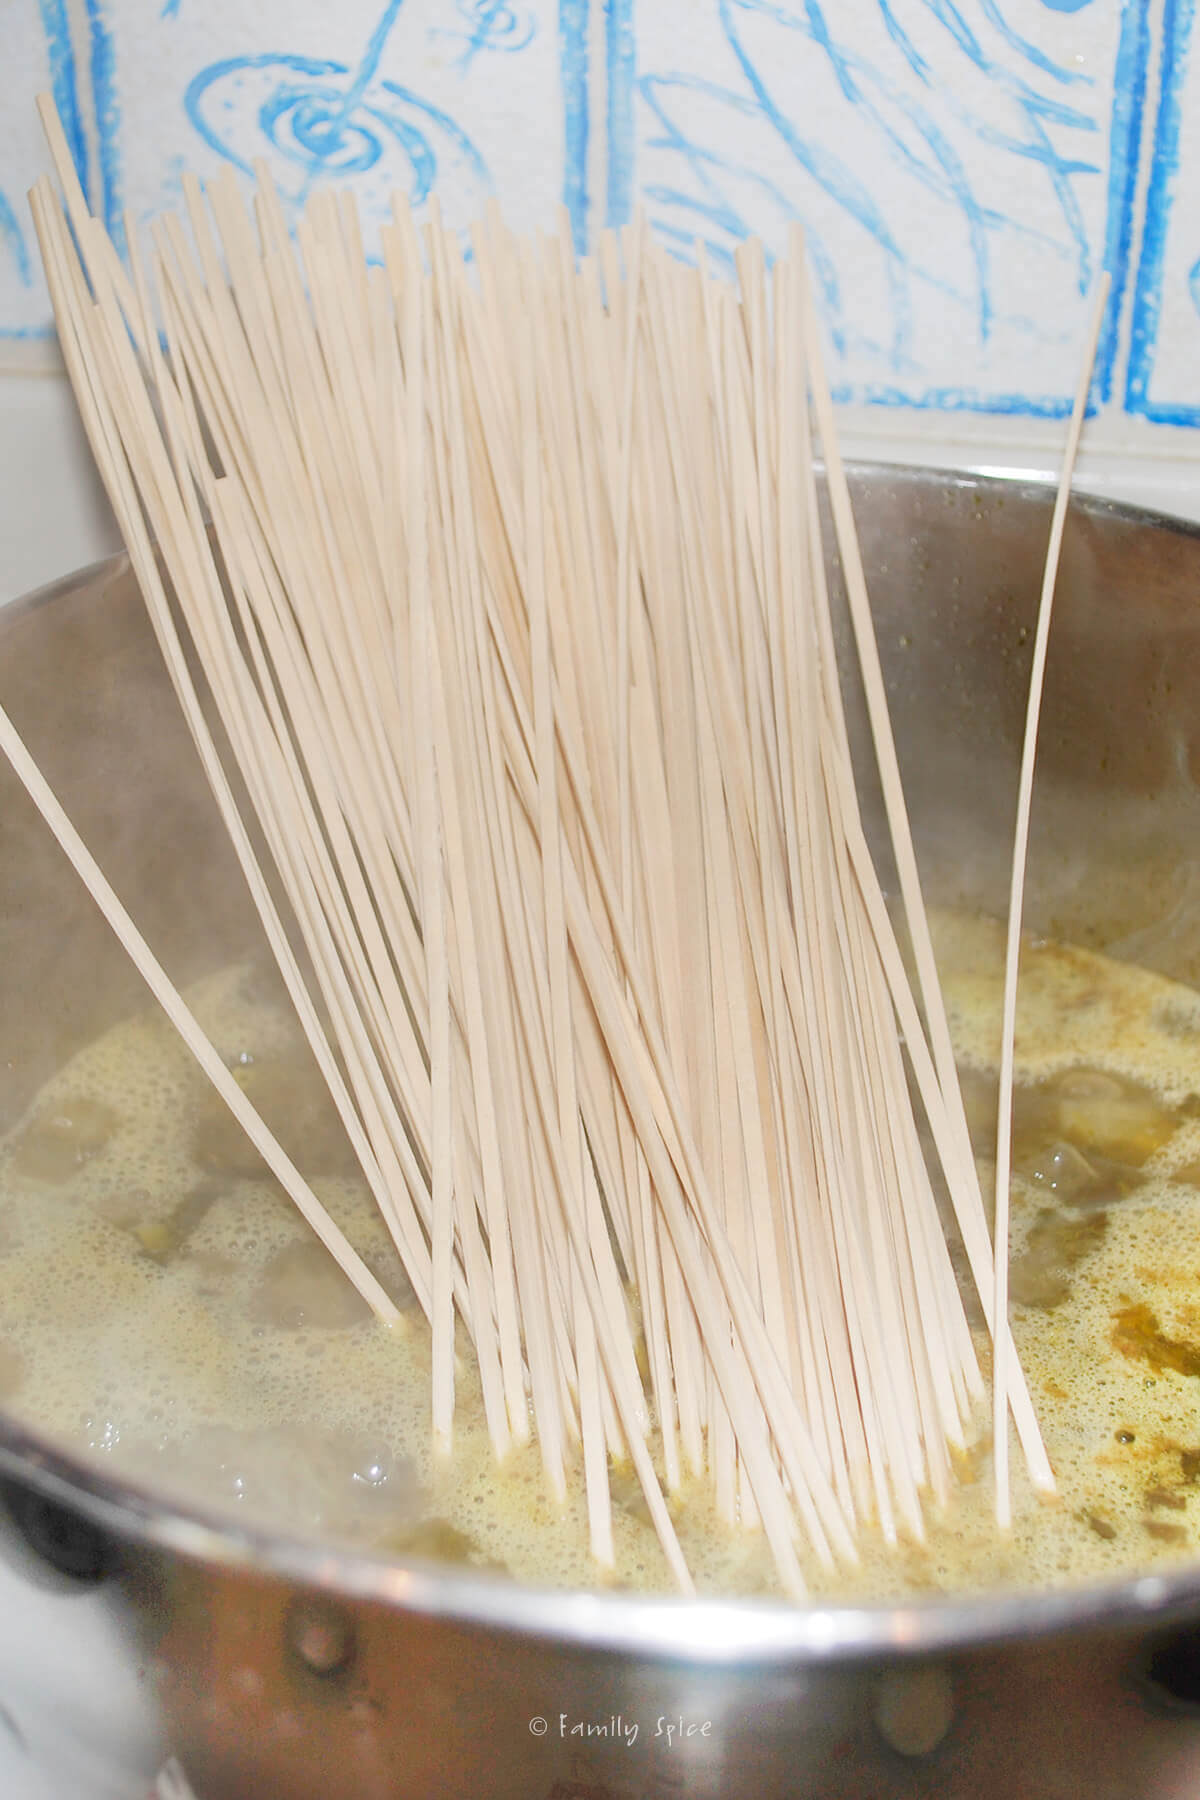 Adding reshteh noodles into a pot of ash reshteh